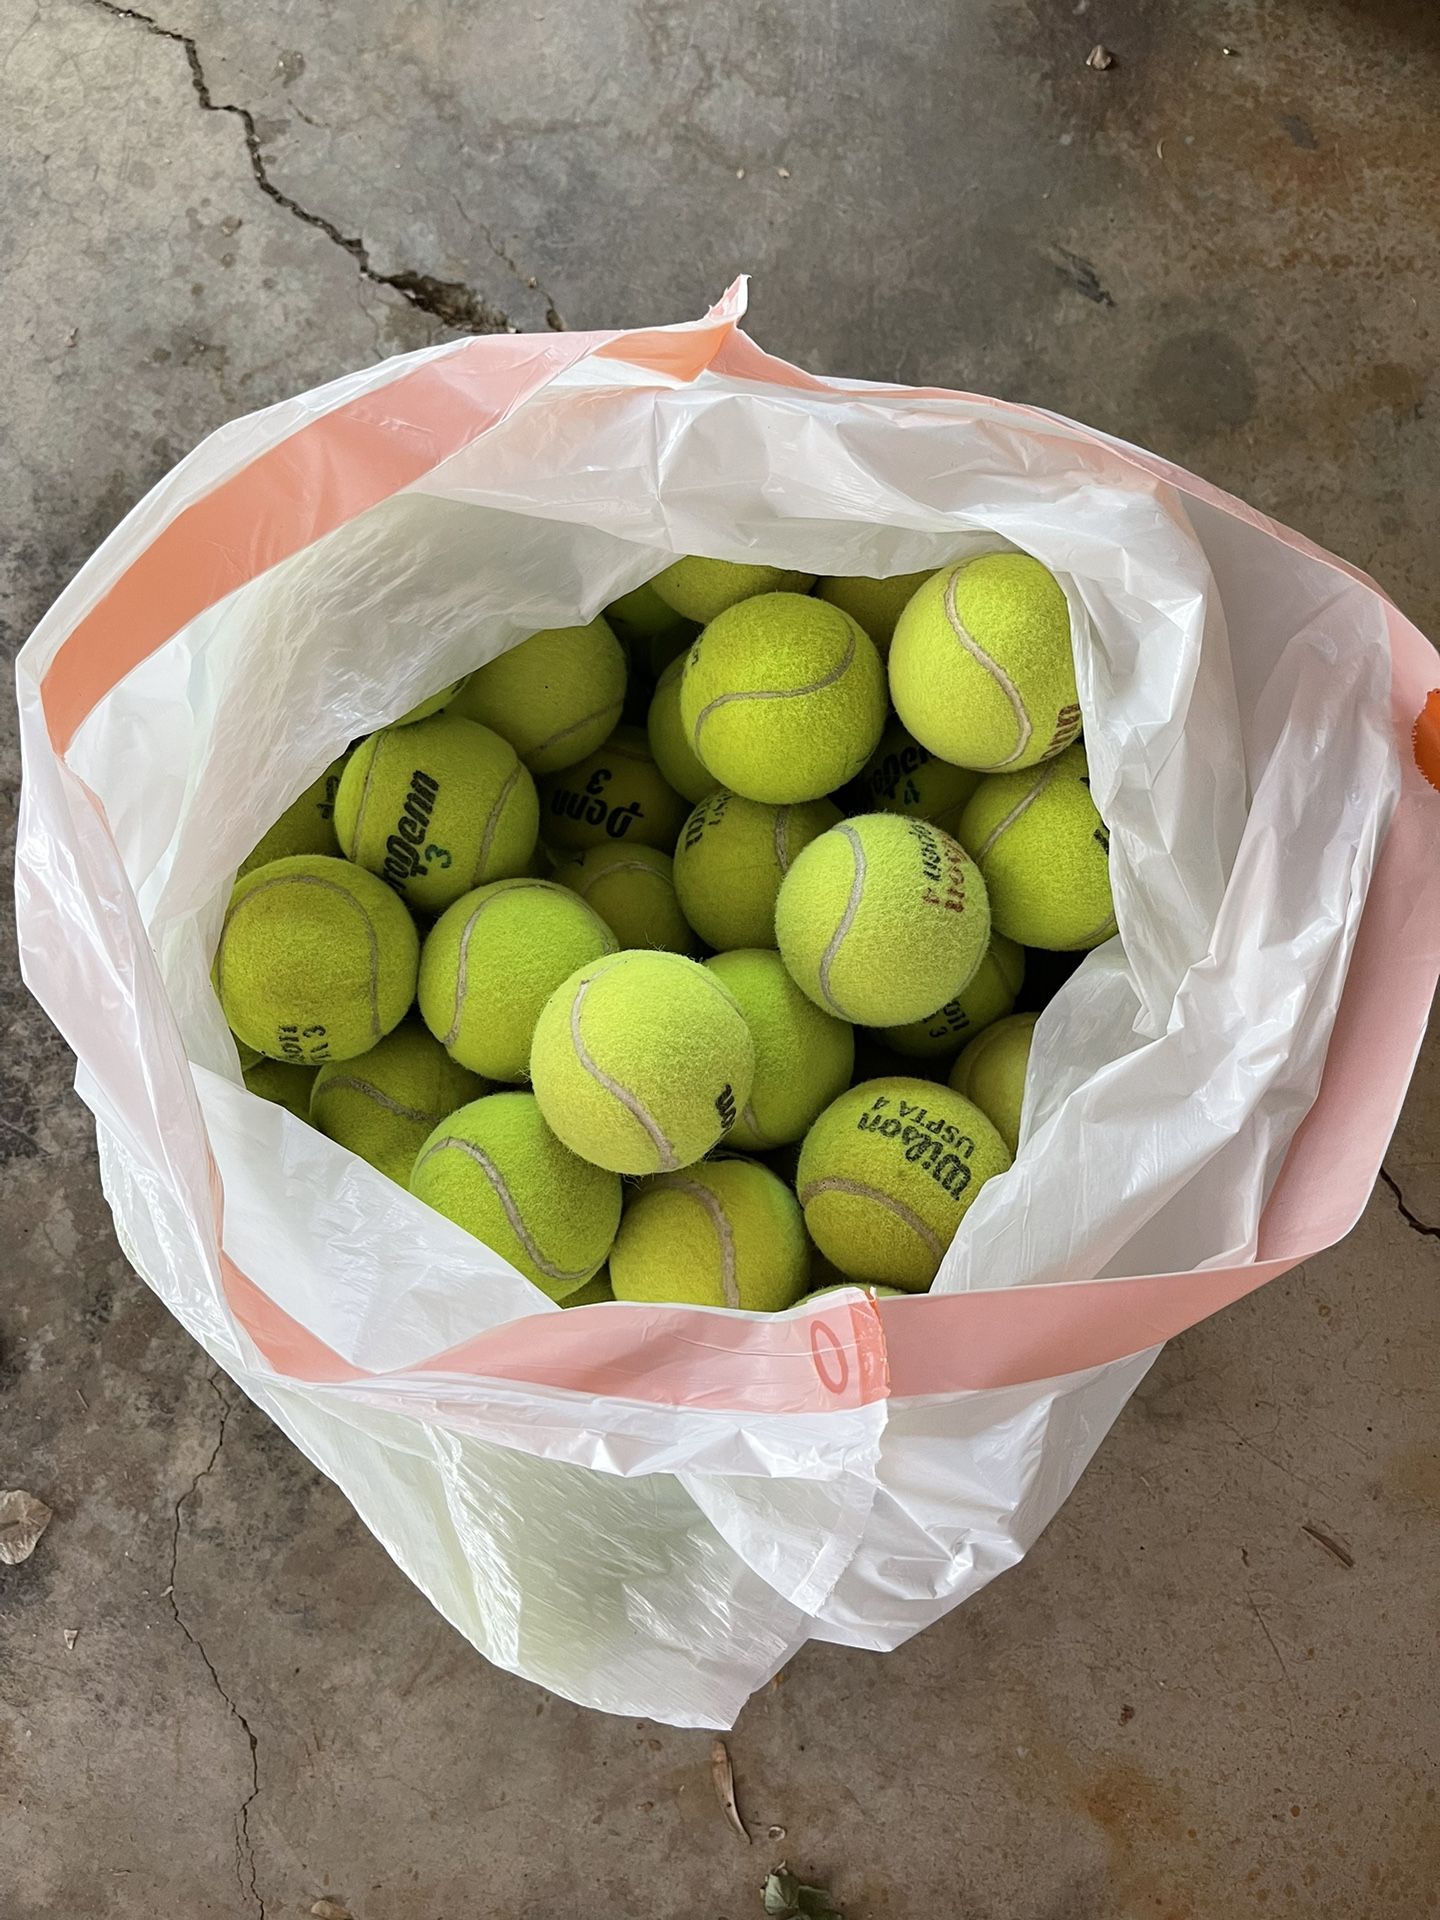 100 Used Tennis Balls